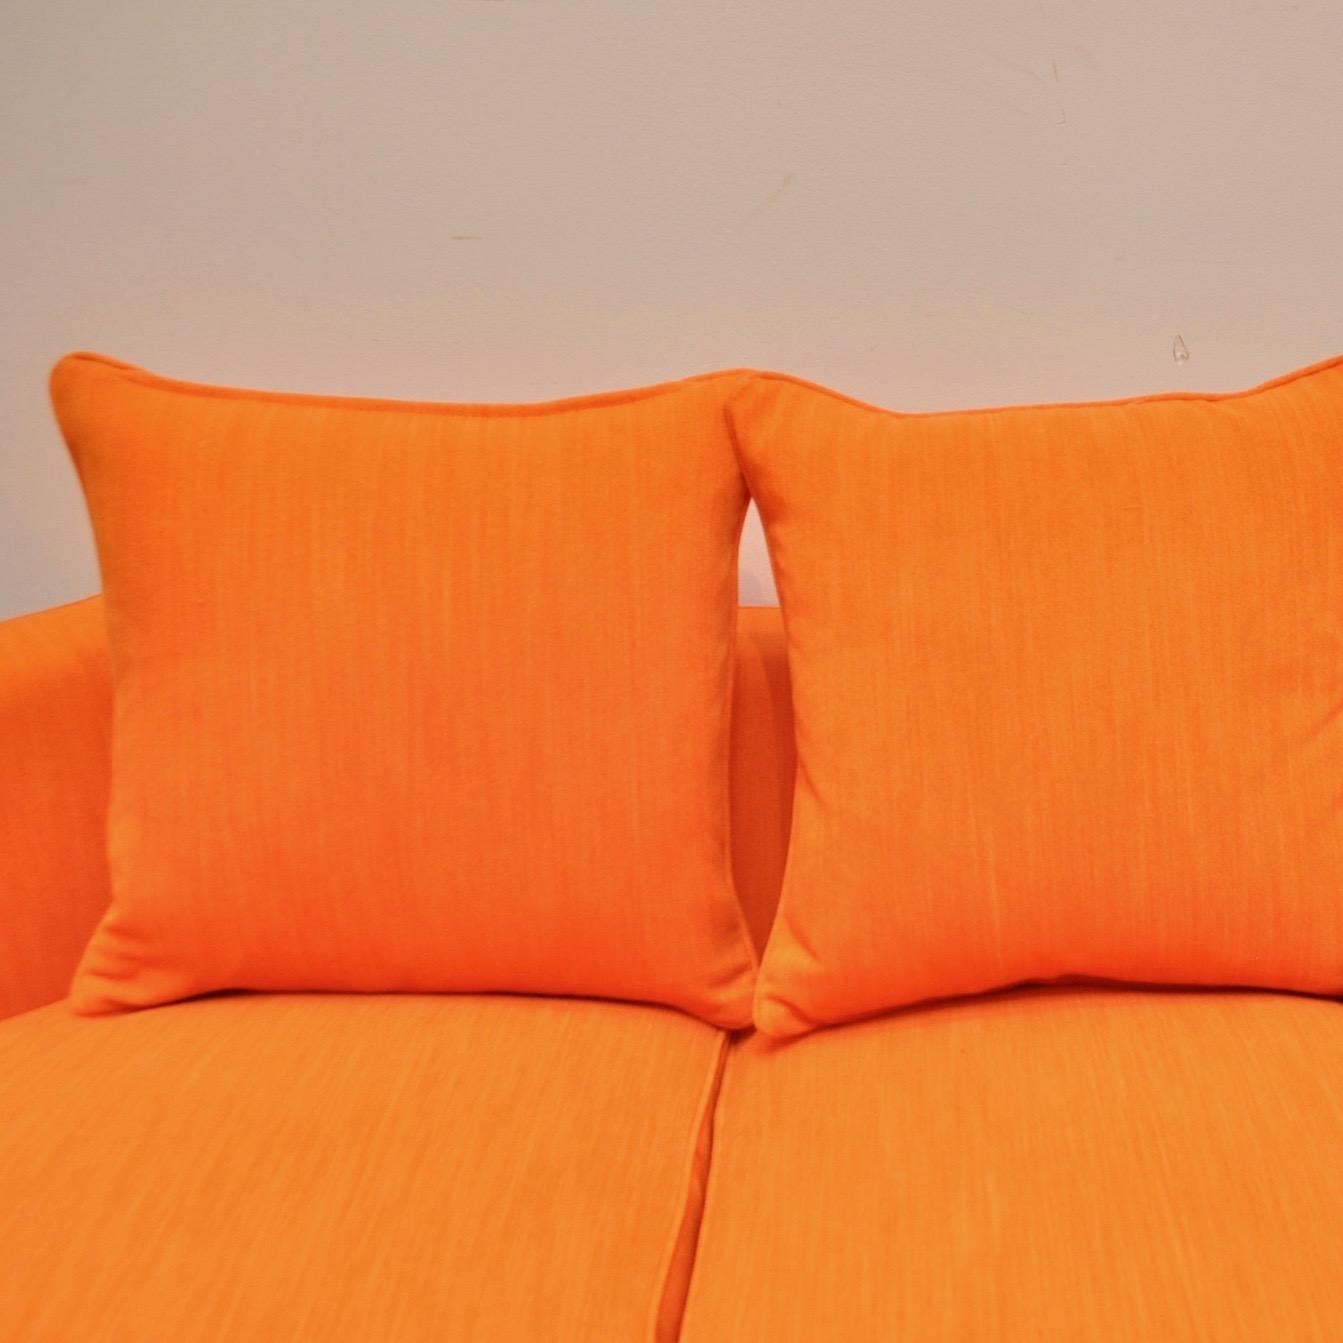 American Mid-Century Modern Angled Sofa